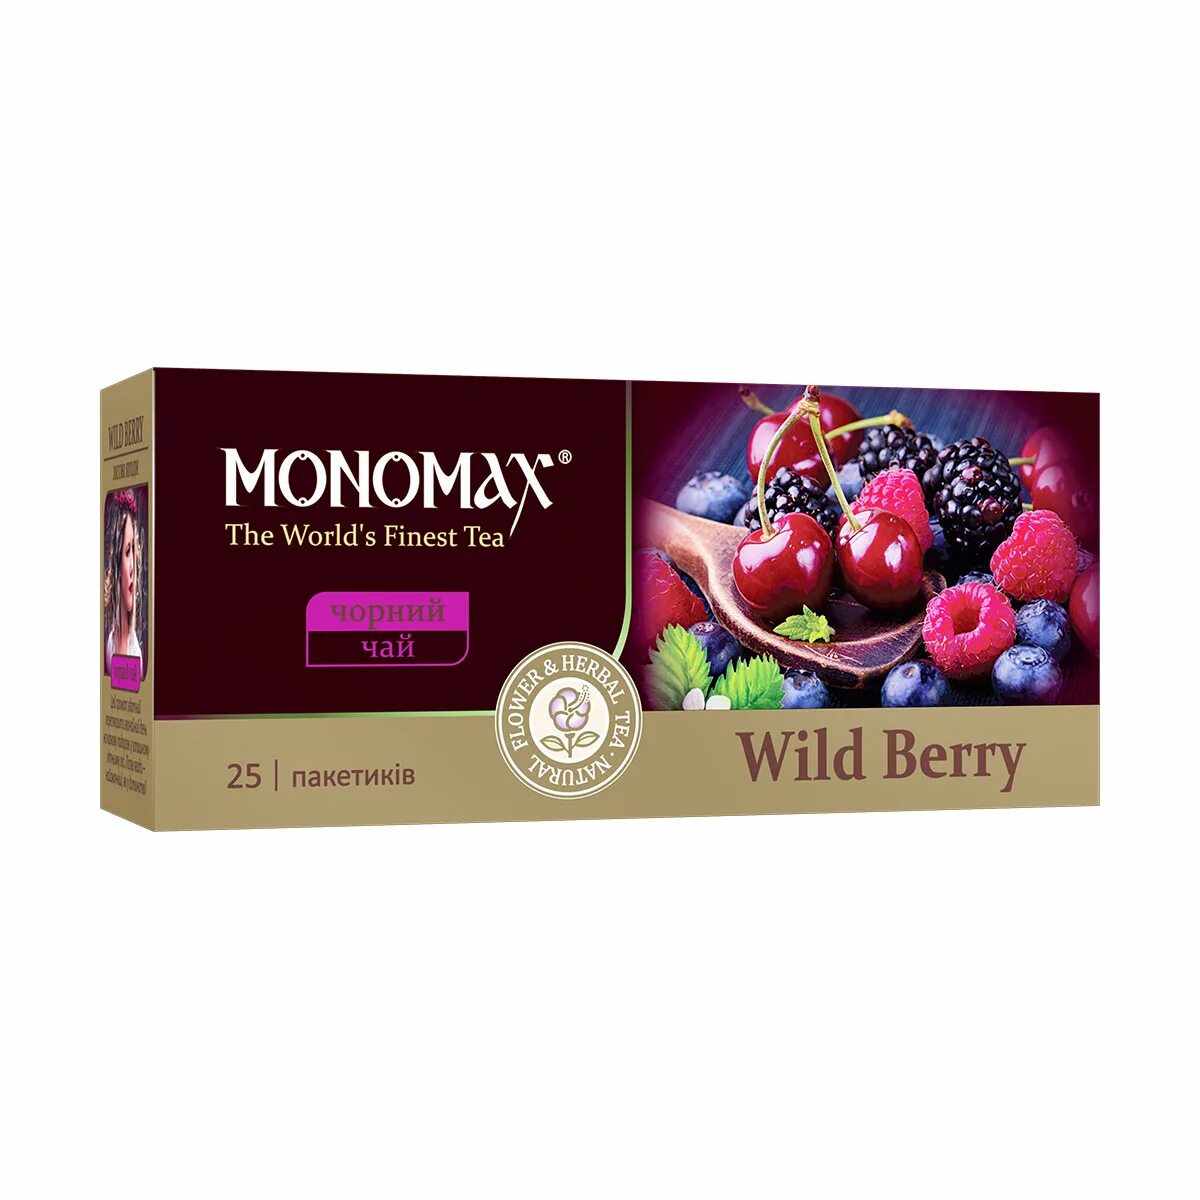 MONOMAX Wild Berry. Чай Мономах. MONOMAX чай. Wildberry чай. Купить чай на wildberries